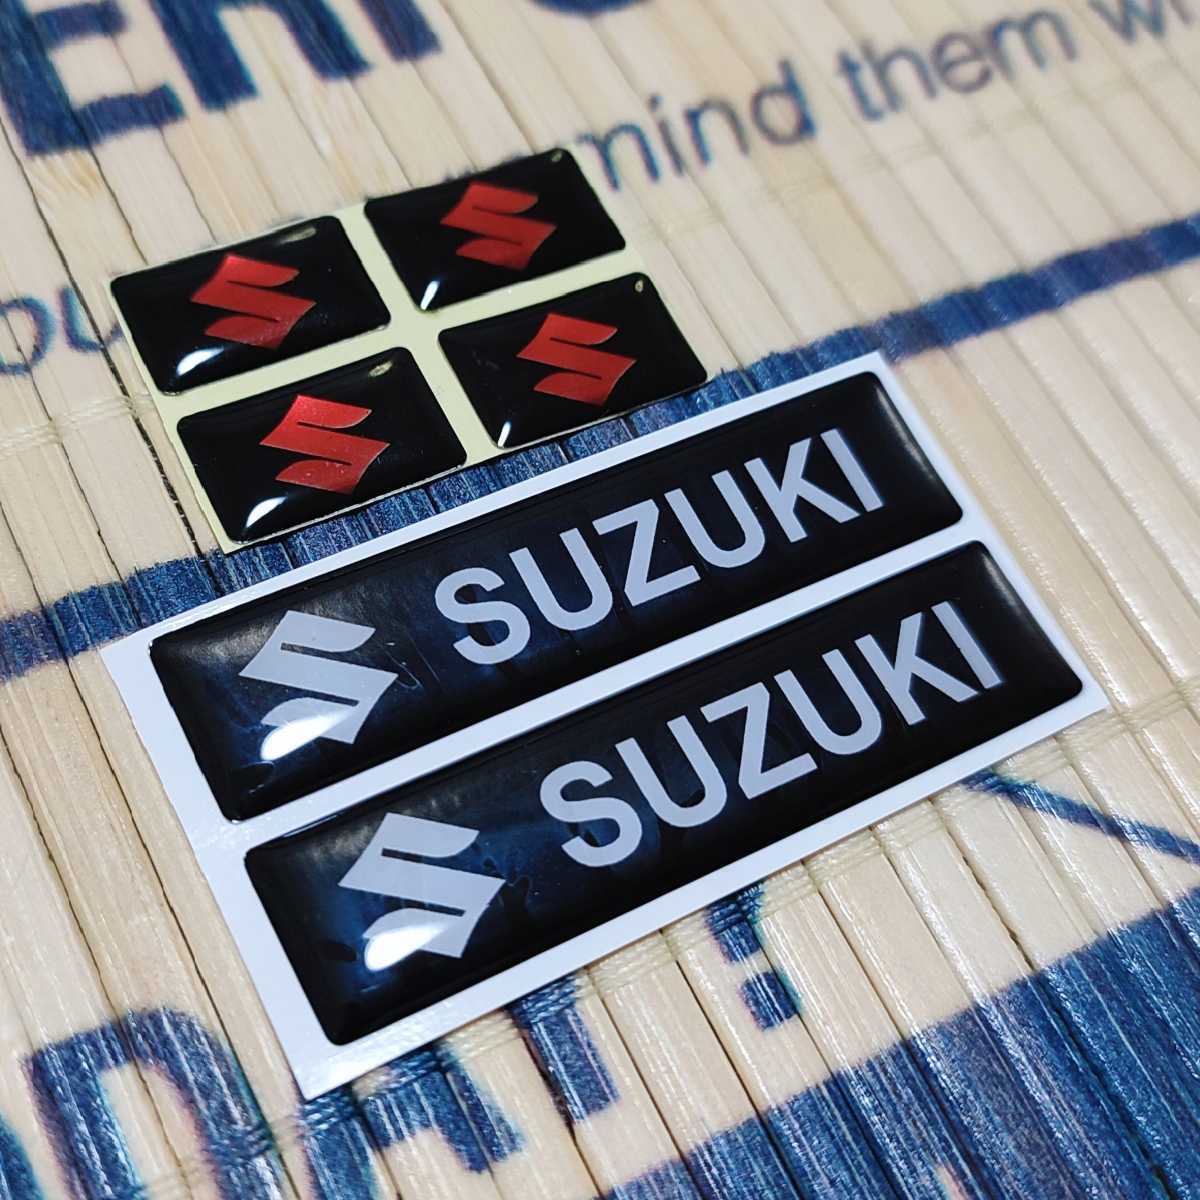  Suzuki 3D Mini sticker B 6 pieces set # Jimny Cross Be Wagon R Swift Hustler Spacia Alto Lapin / chocolate / Works Solio 